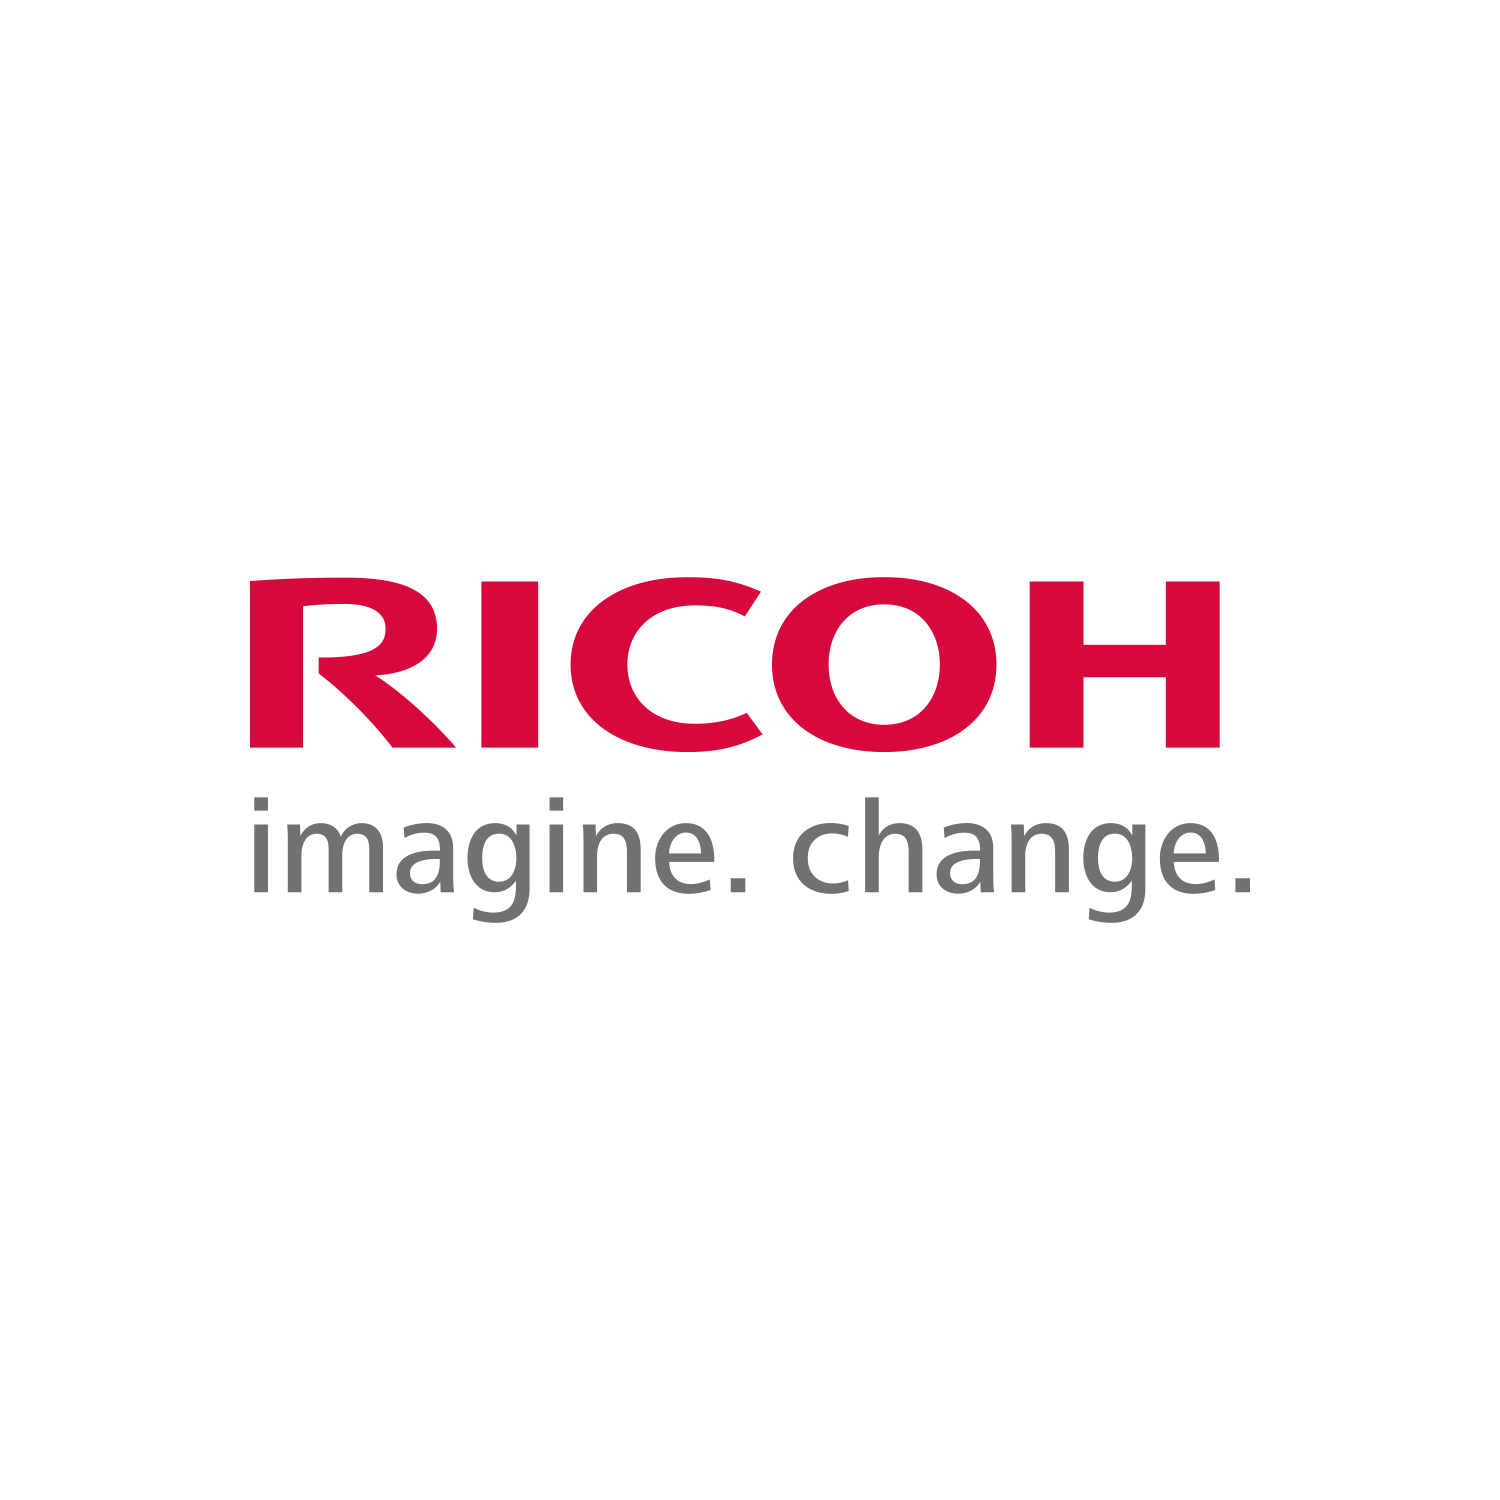 Ricoh Corporation Logo